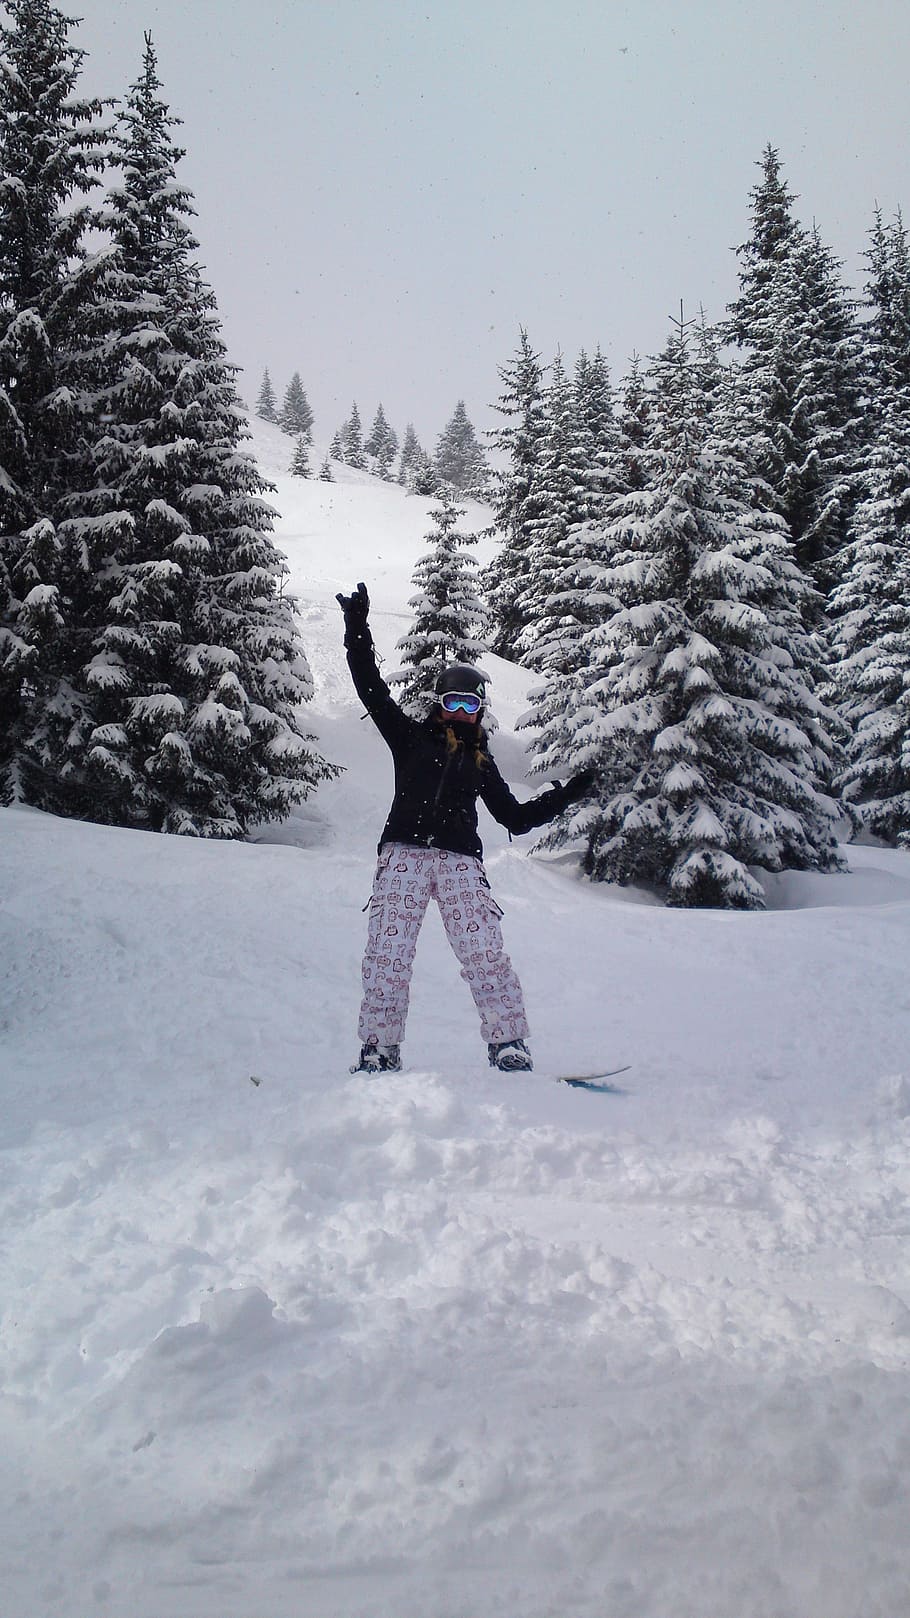 snowboard, snowboarding, ride, new zealand, deep snow, winter, dream day, riding, mountains, alpine